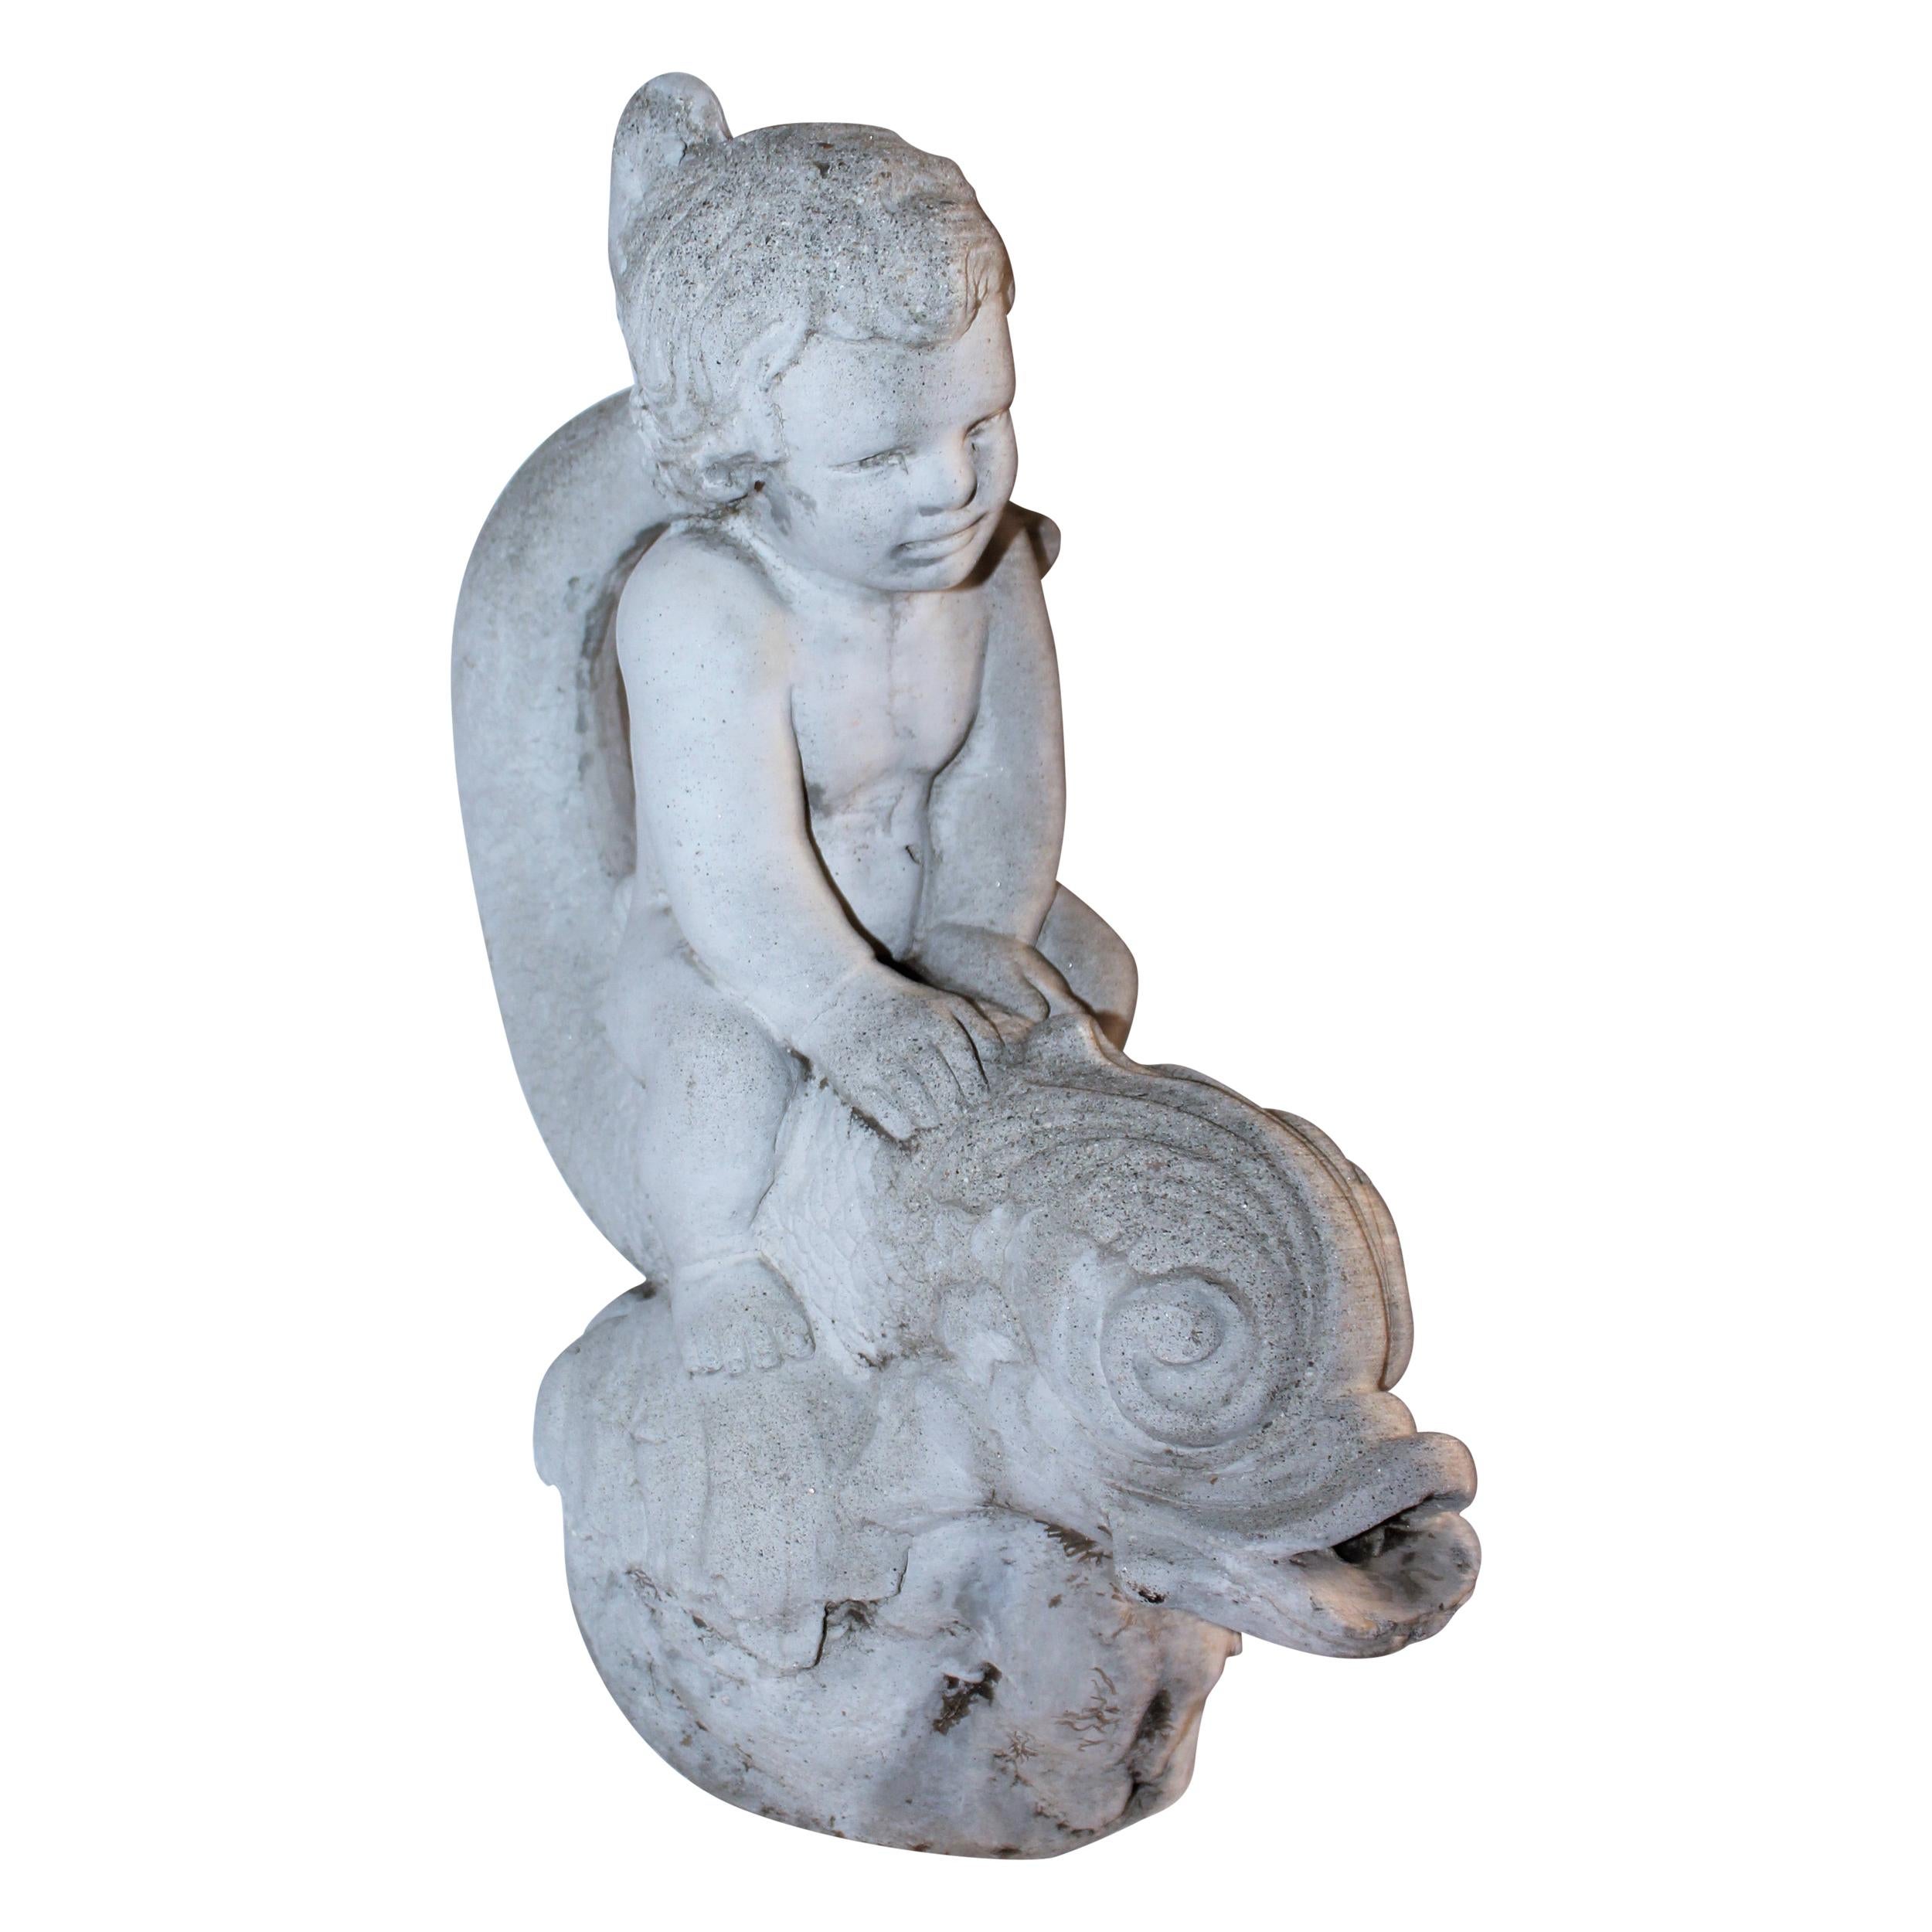 19th C Cement Fountain of "Boy Poseidon" Riding a Large Koi